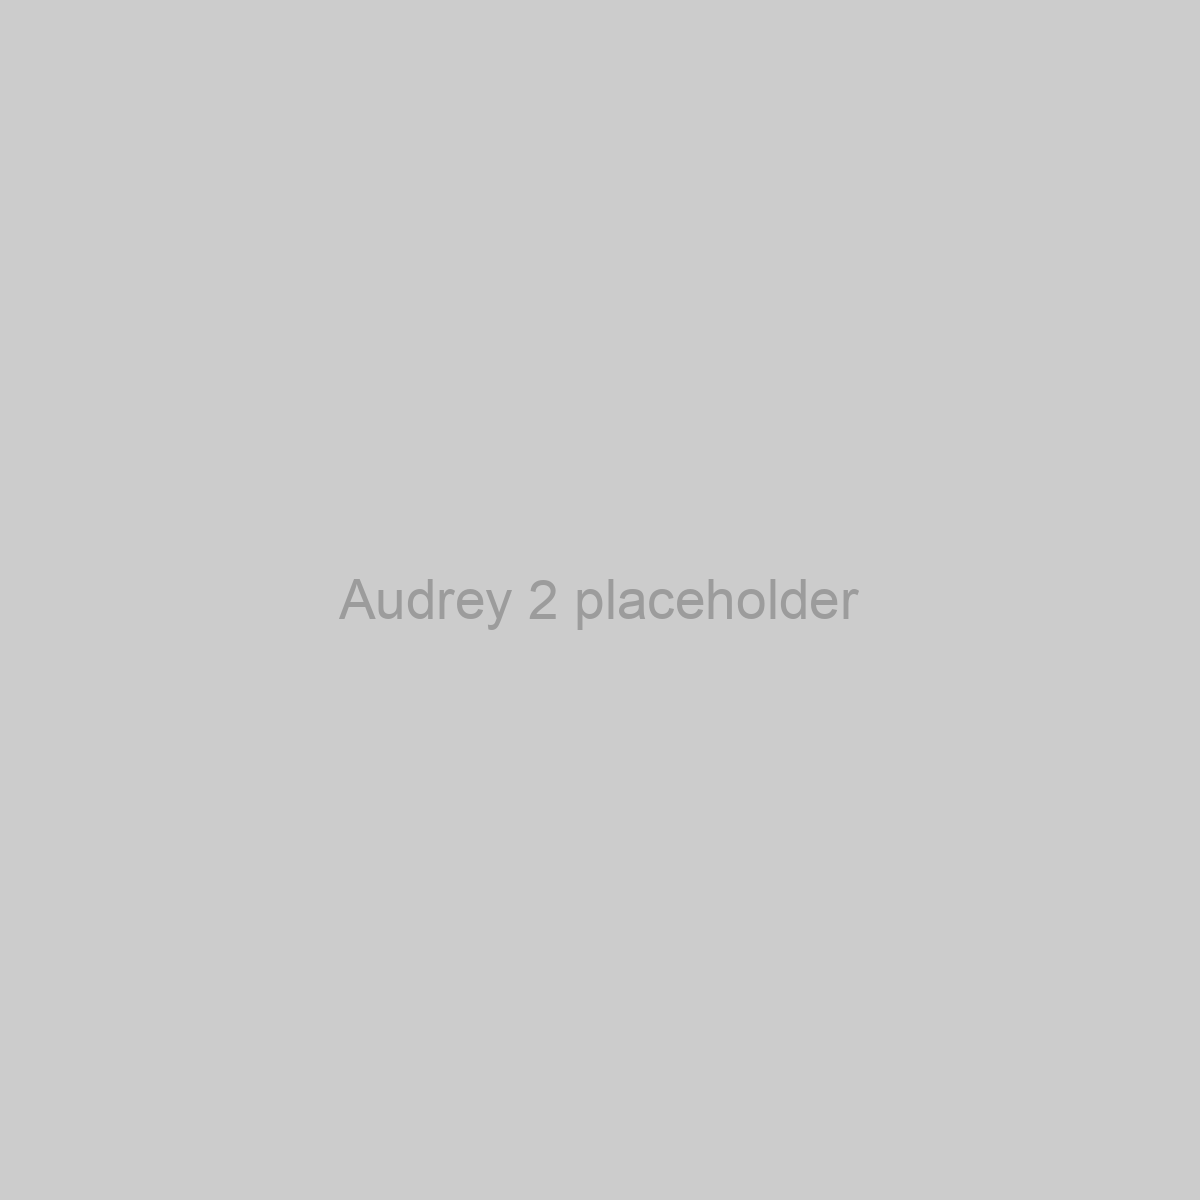 Audrey 2 Placeholder Image